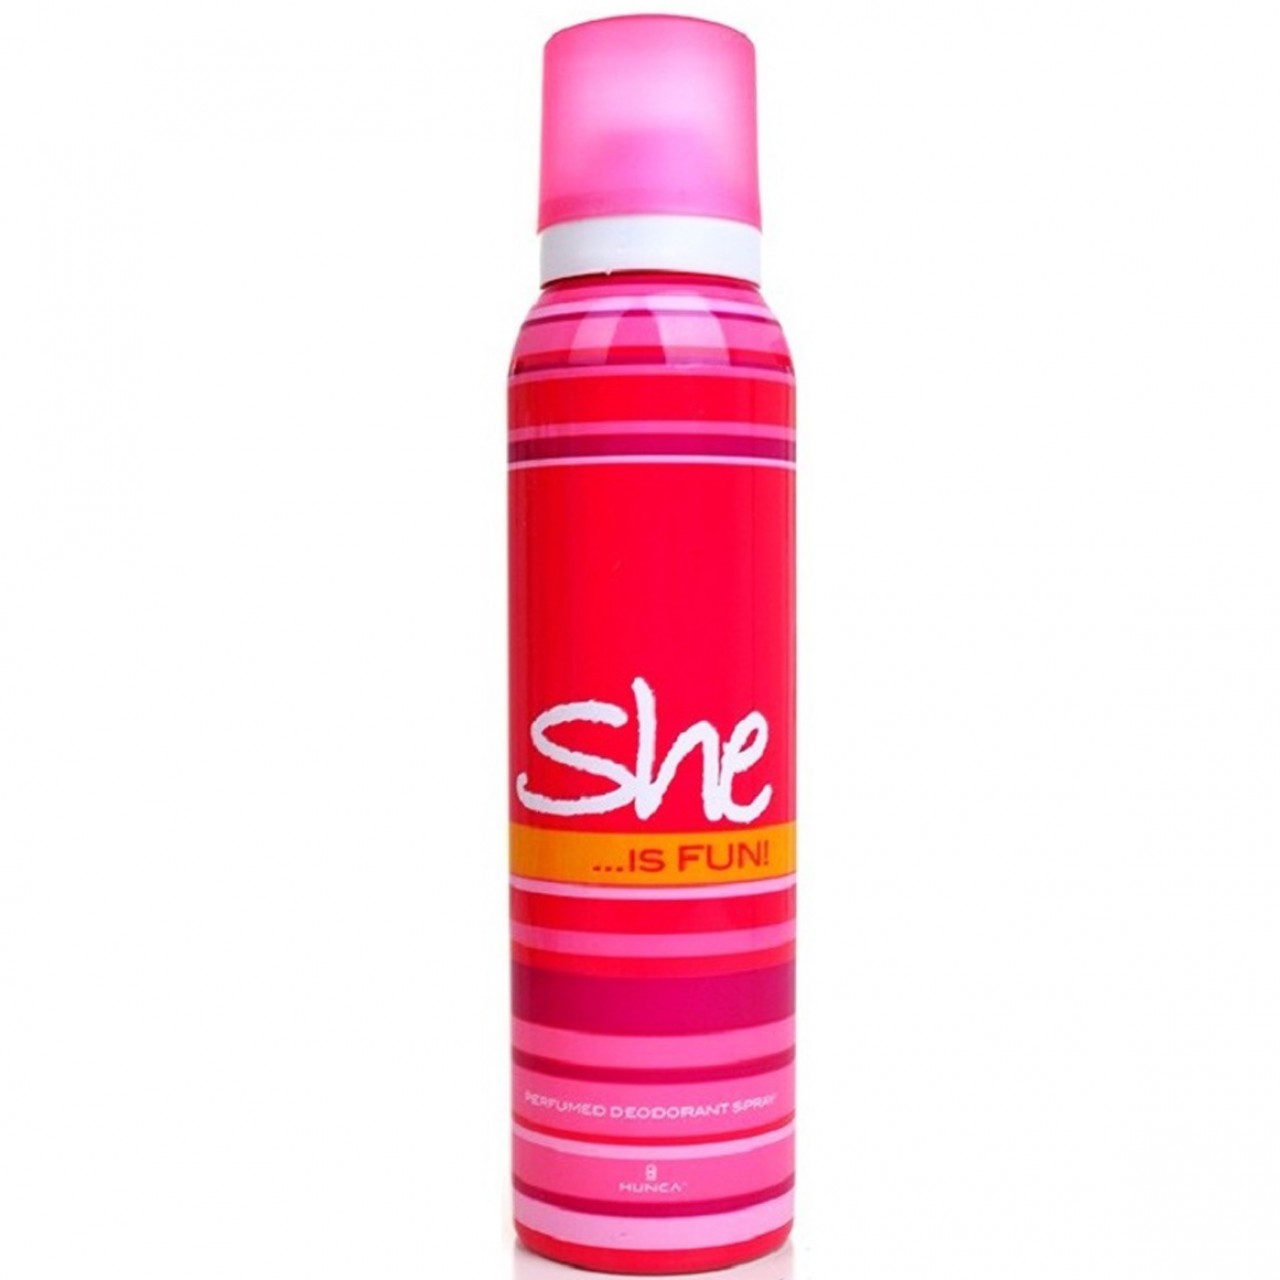 She is Fun Body Spray Deodorant - 200 ml - Pink